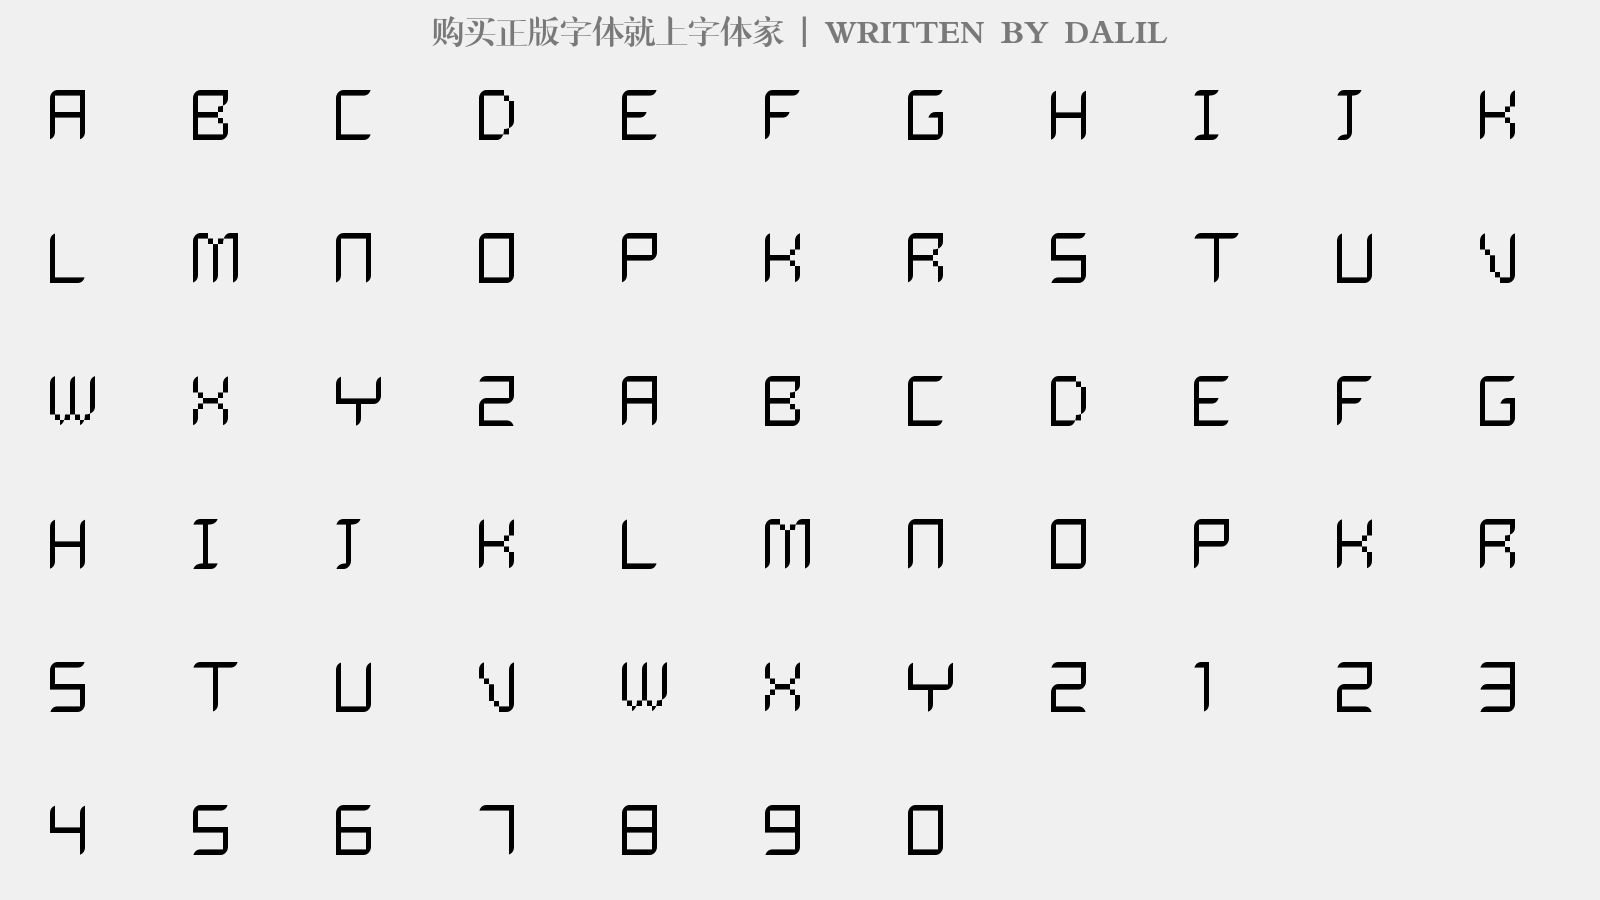 DALIL - 大写字母/小写字母/数字